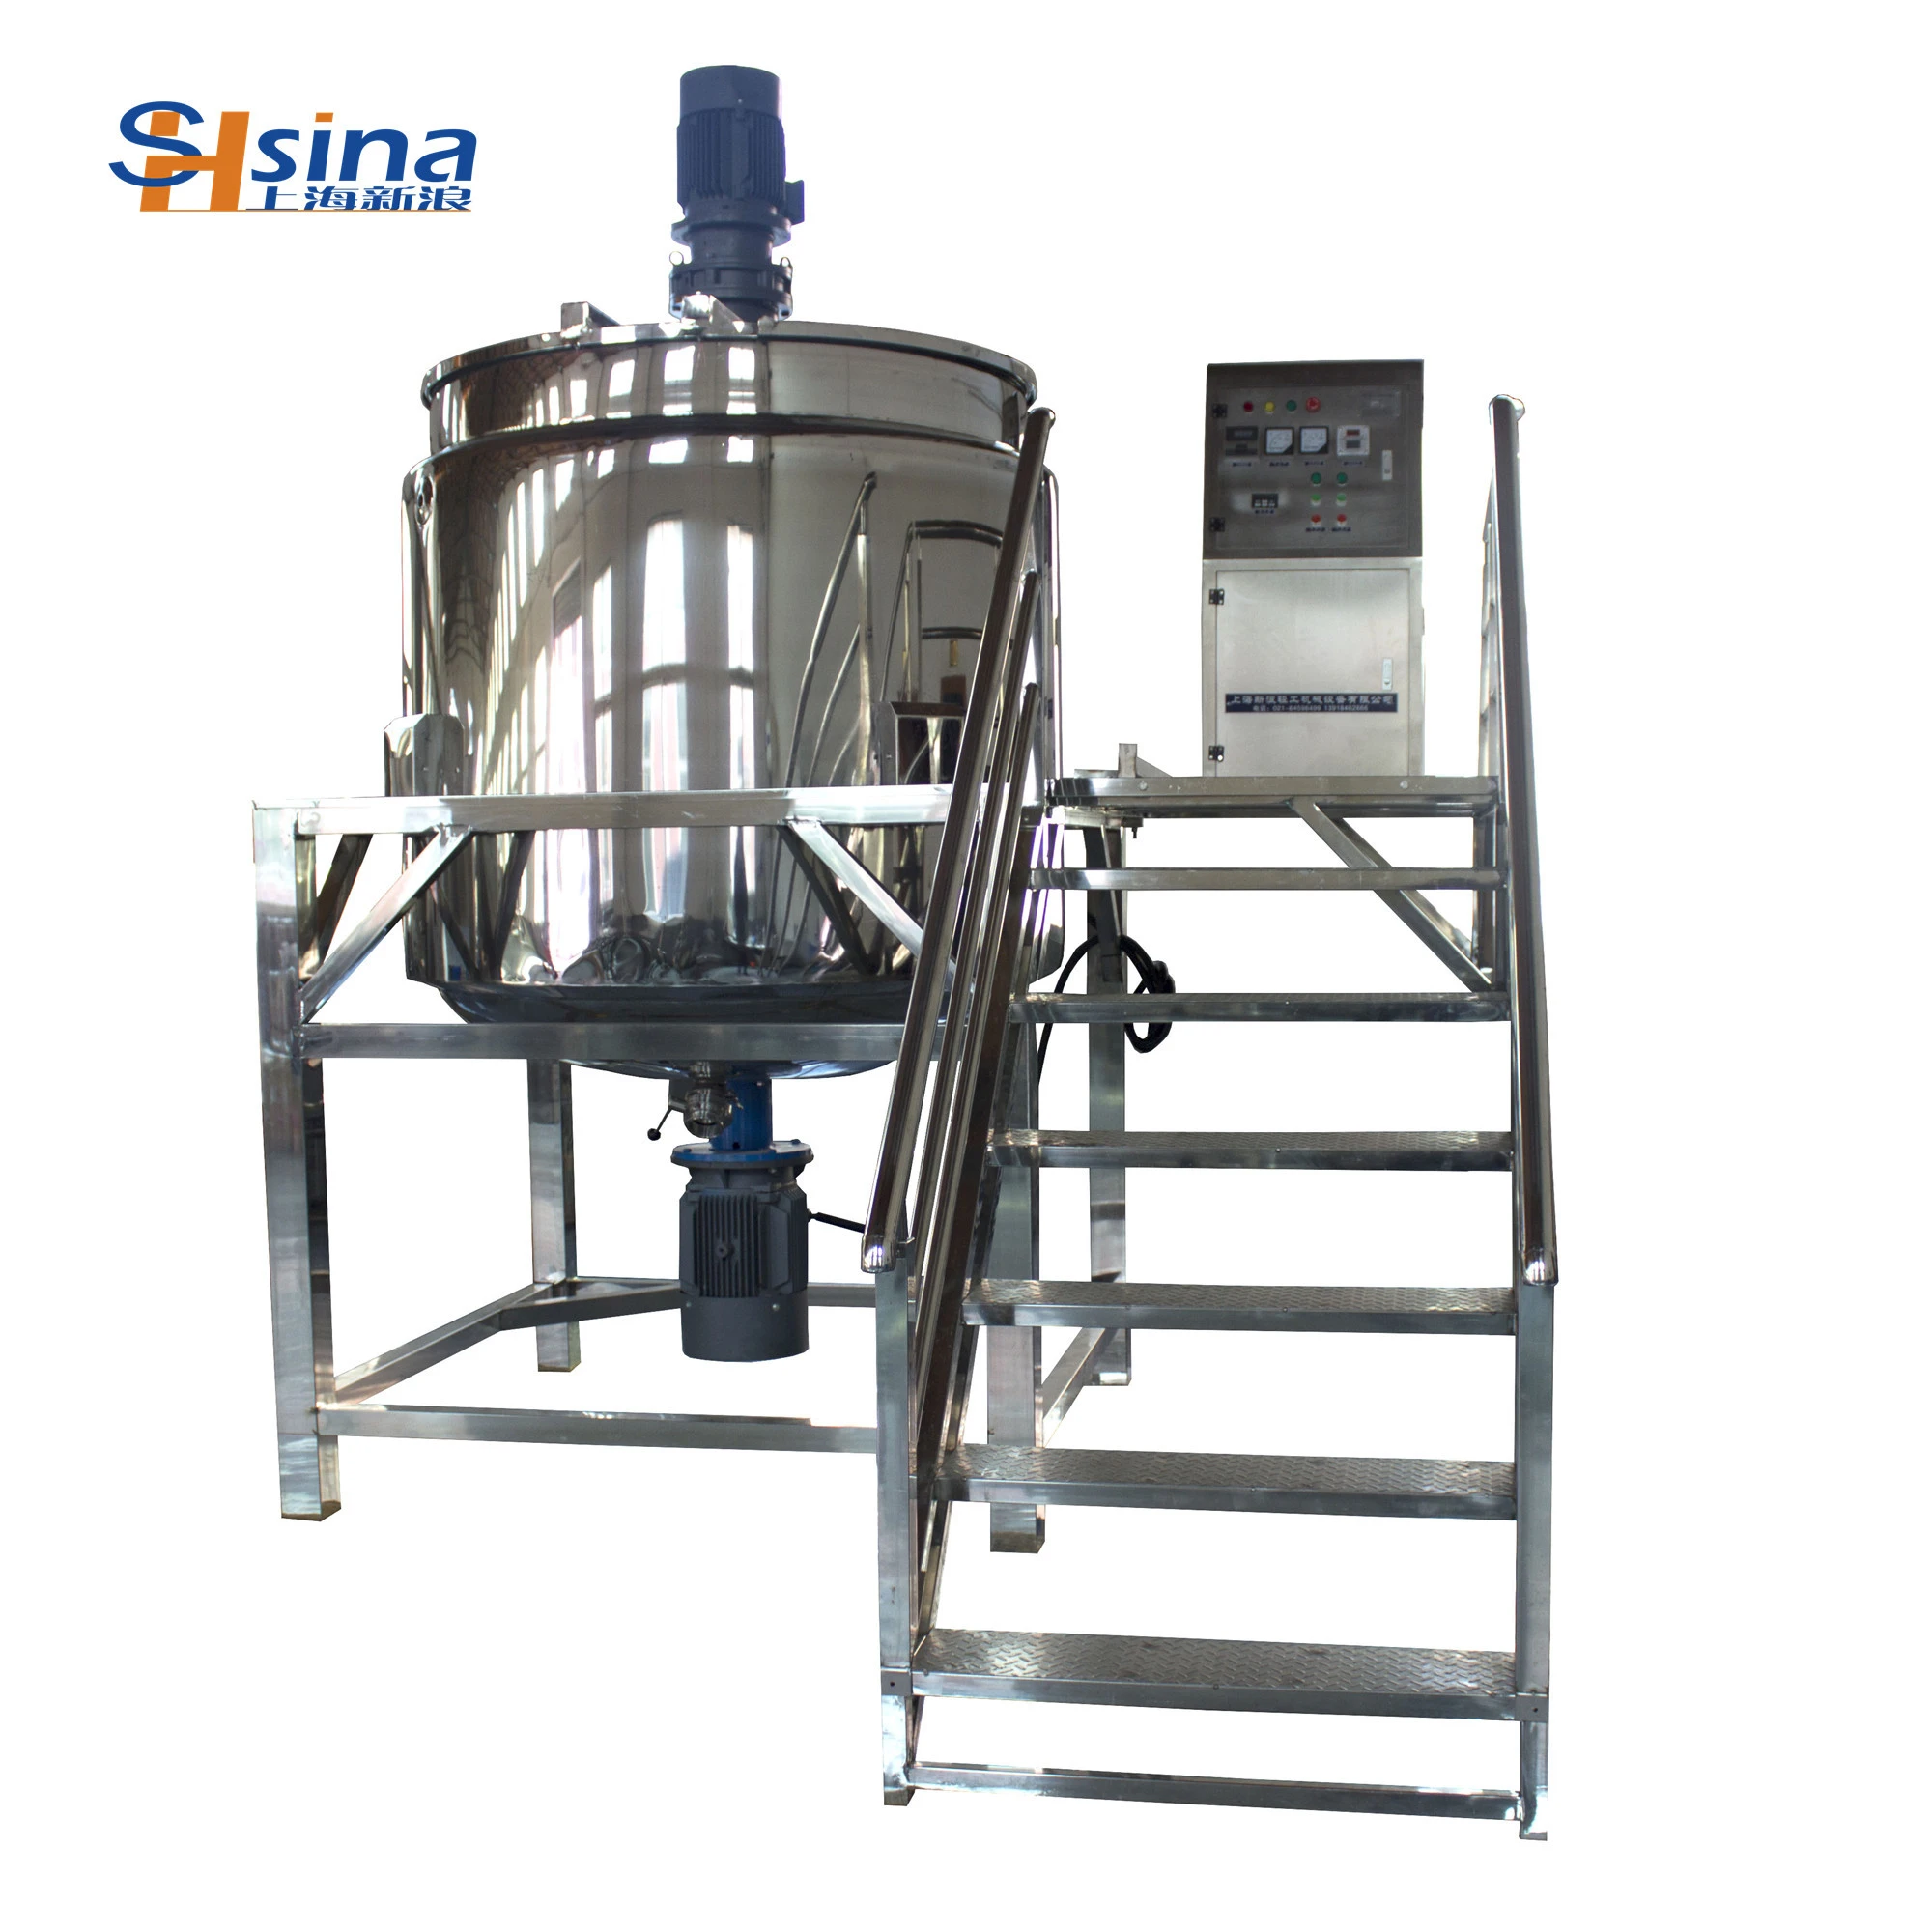 SHSINA liquid chemical mixers shower gel mixer equipment price of liquid soap making machine with high quality